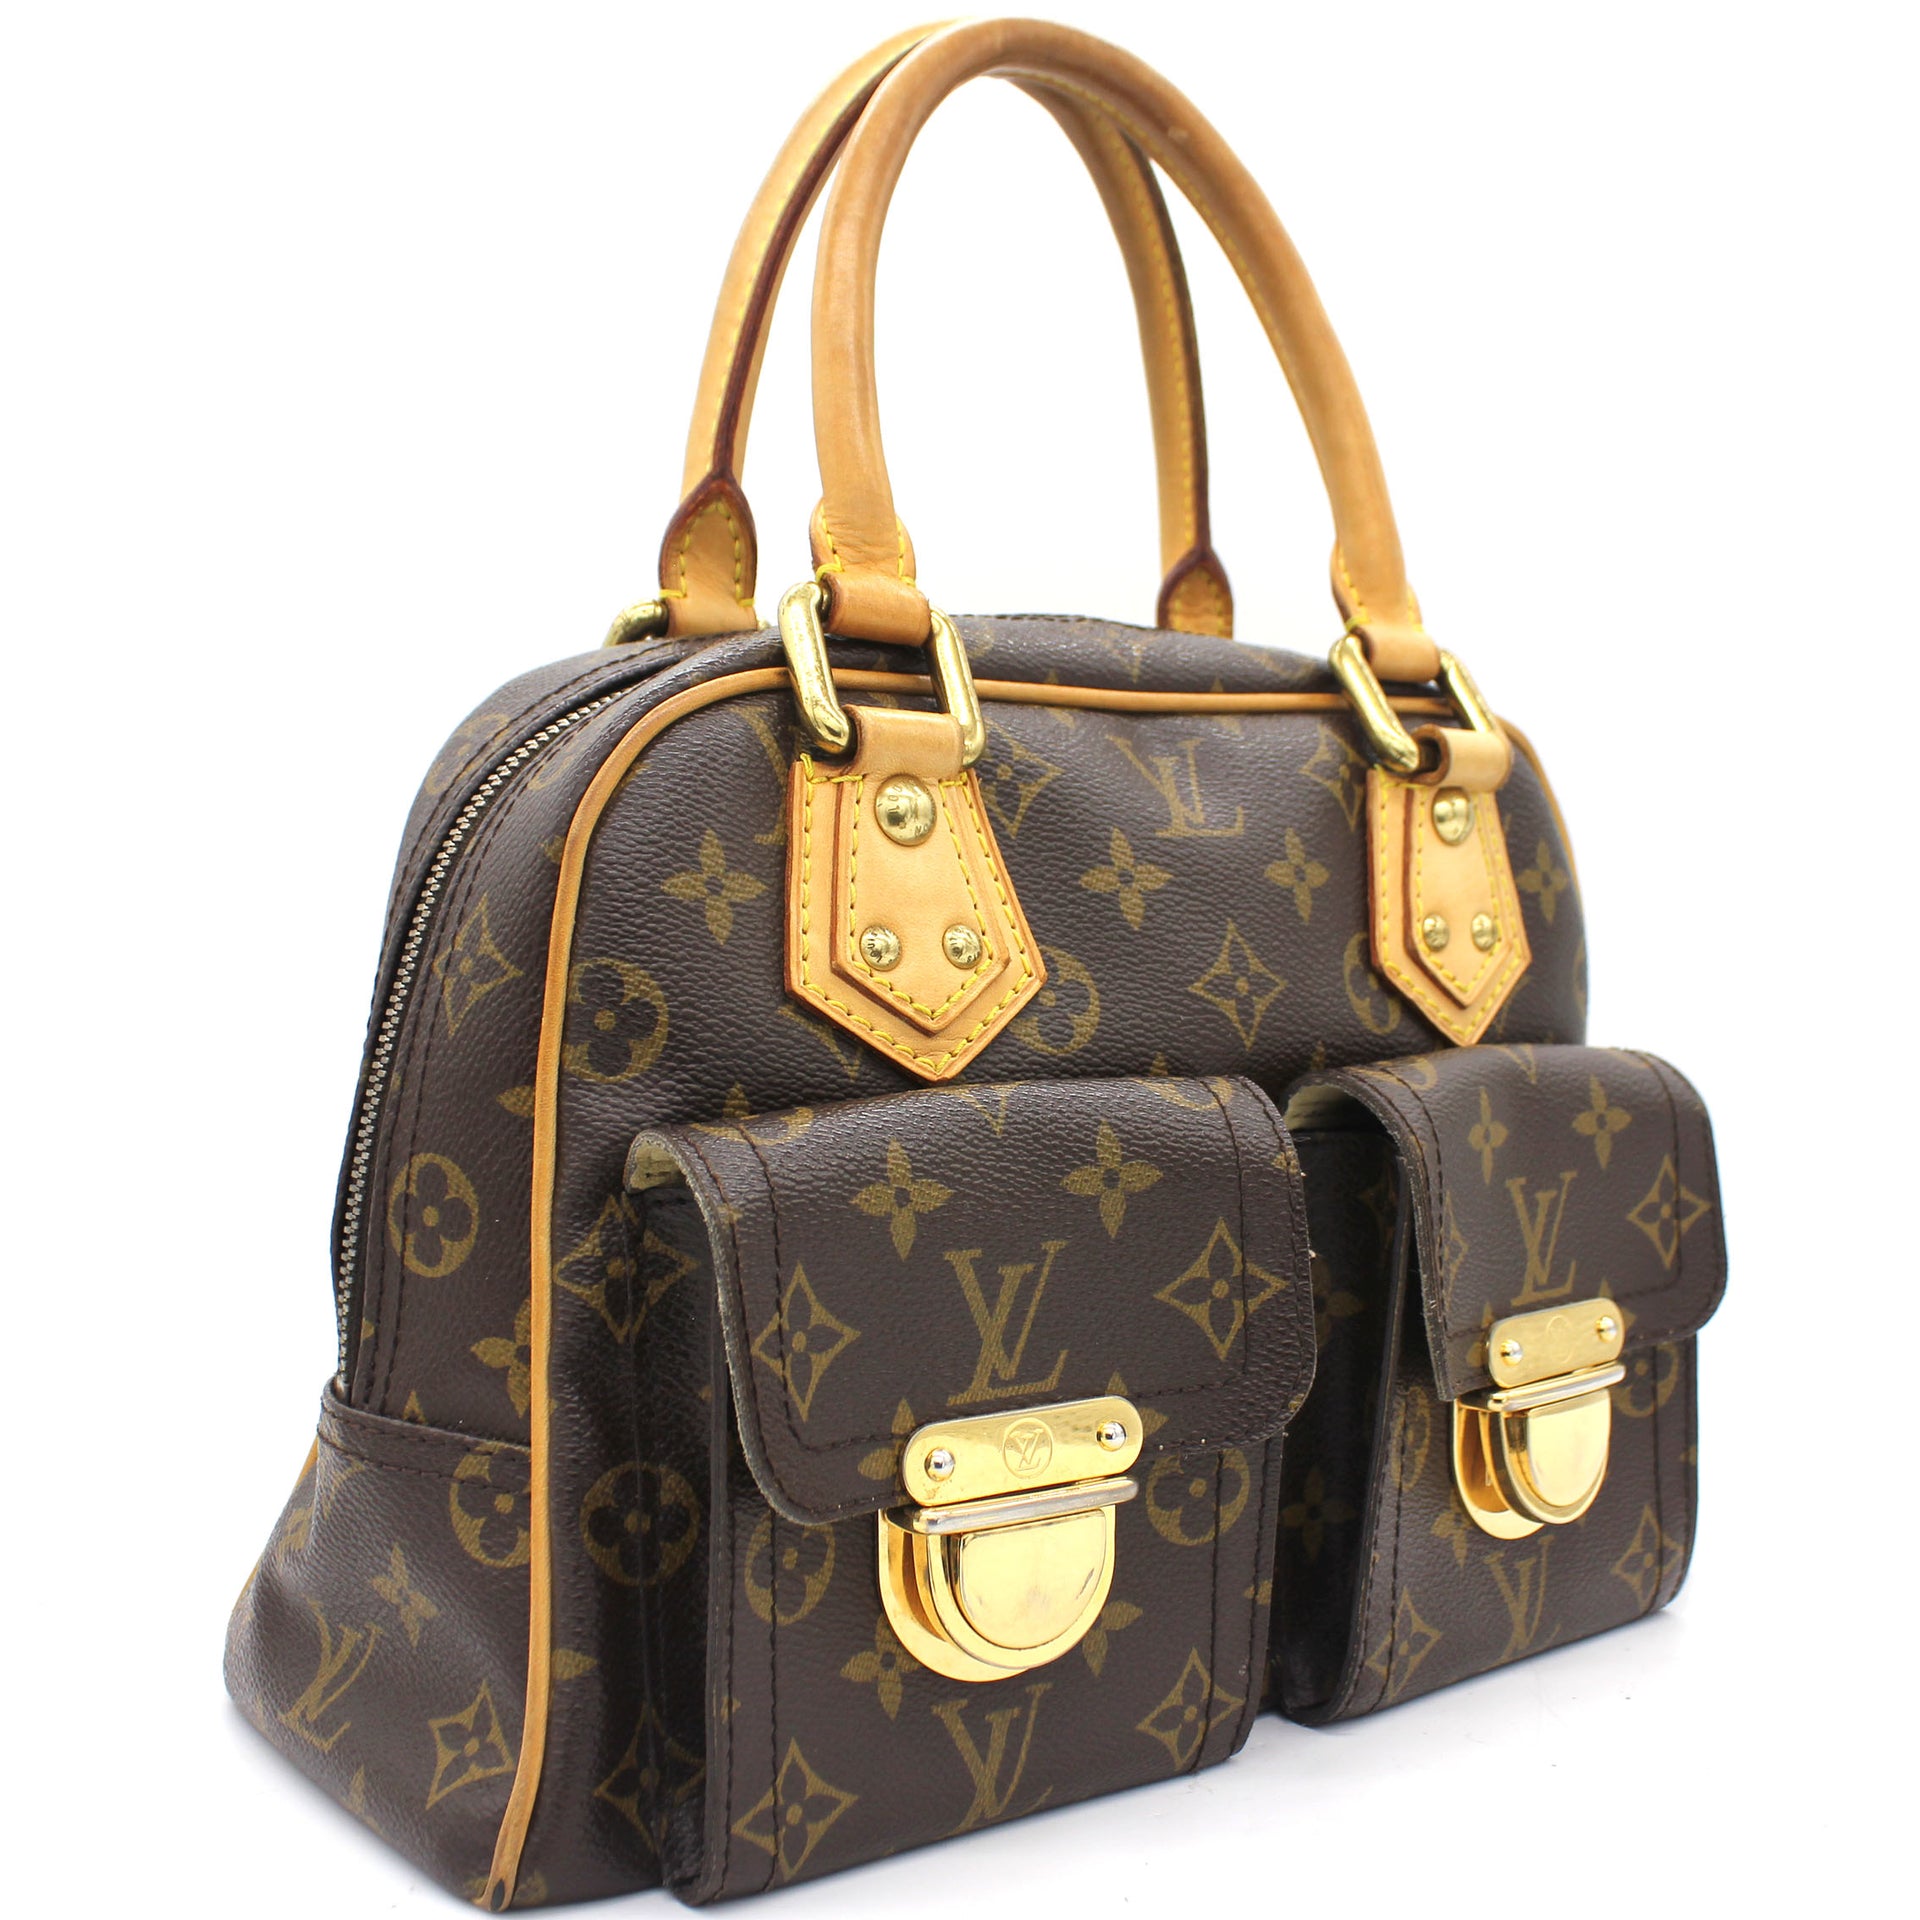 Louis Vuitton Manhattan Bag 2020 Price